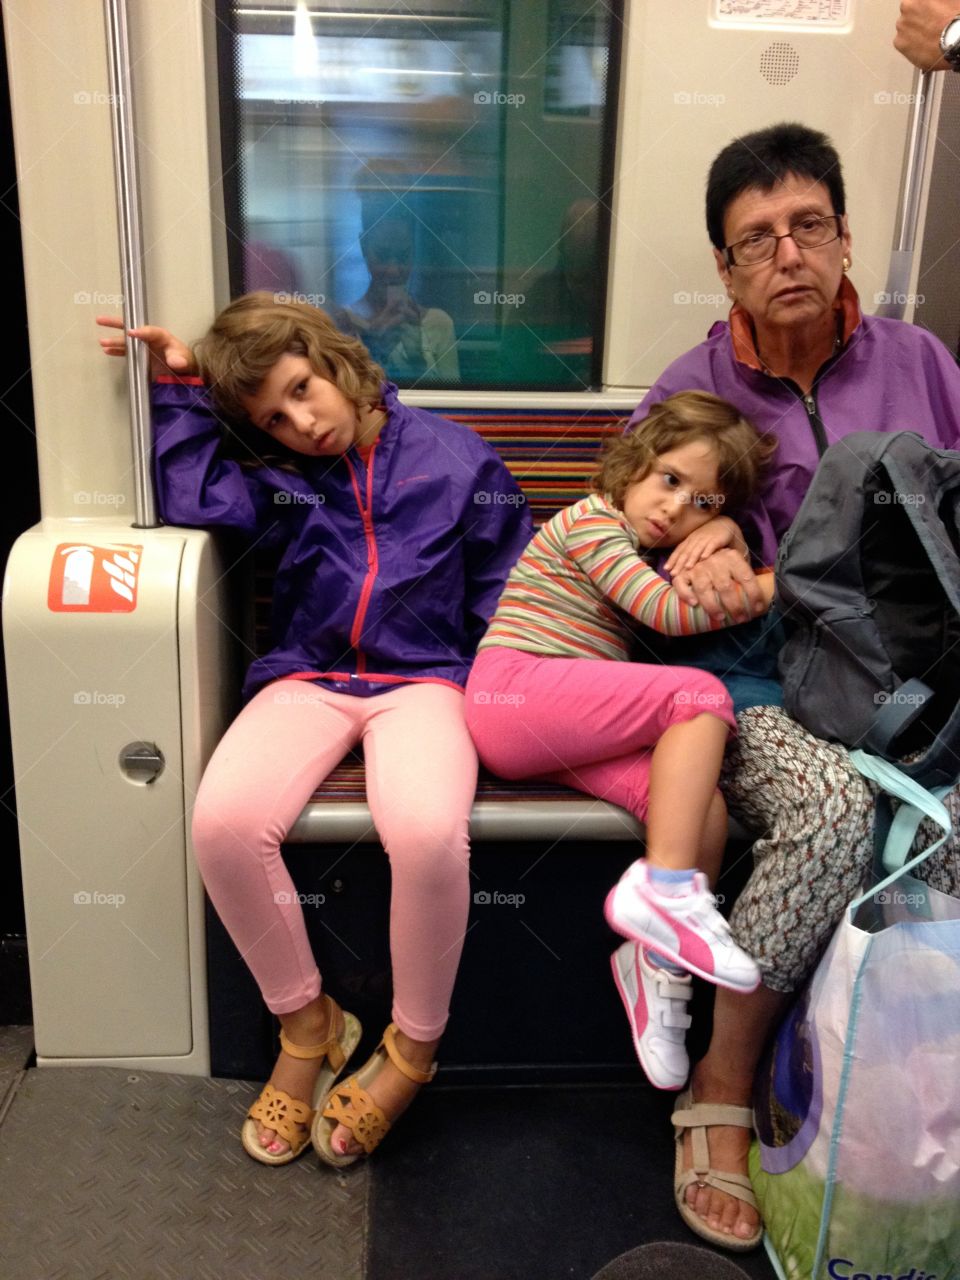 Sad children in the subway